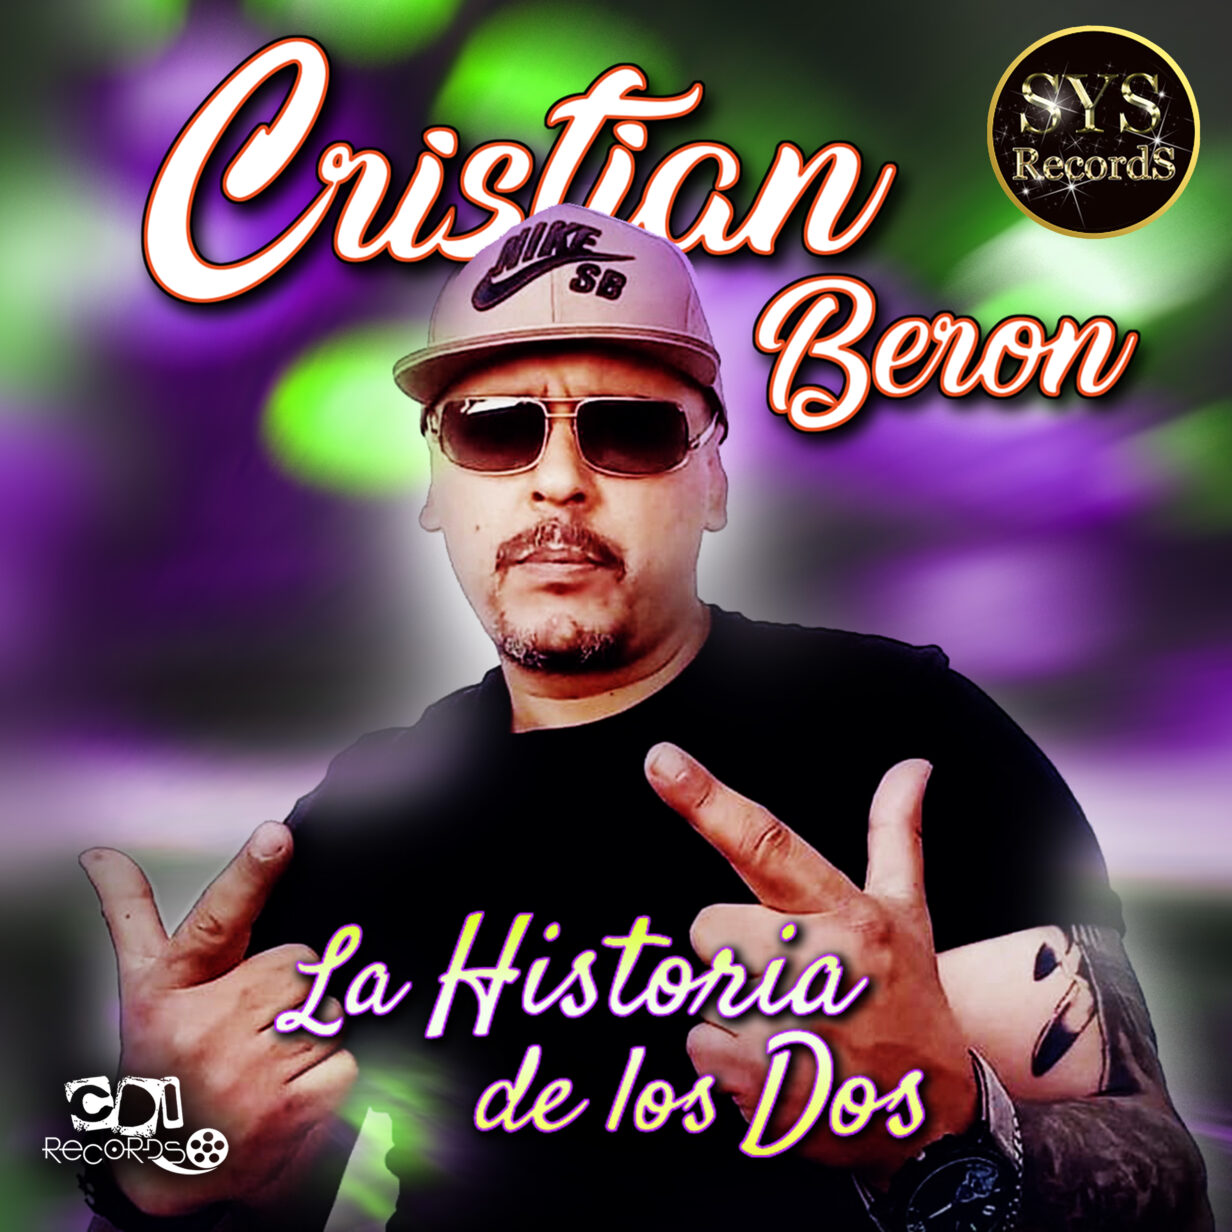 Cristian Beron